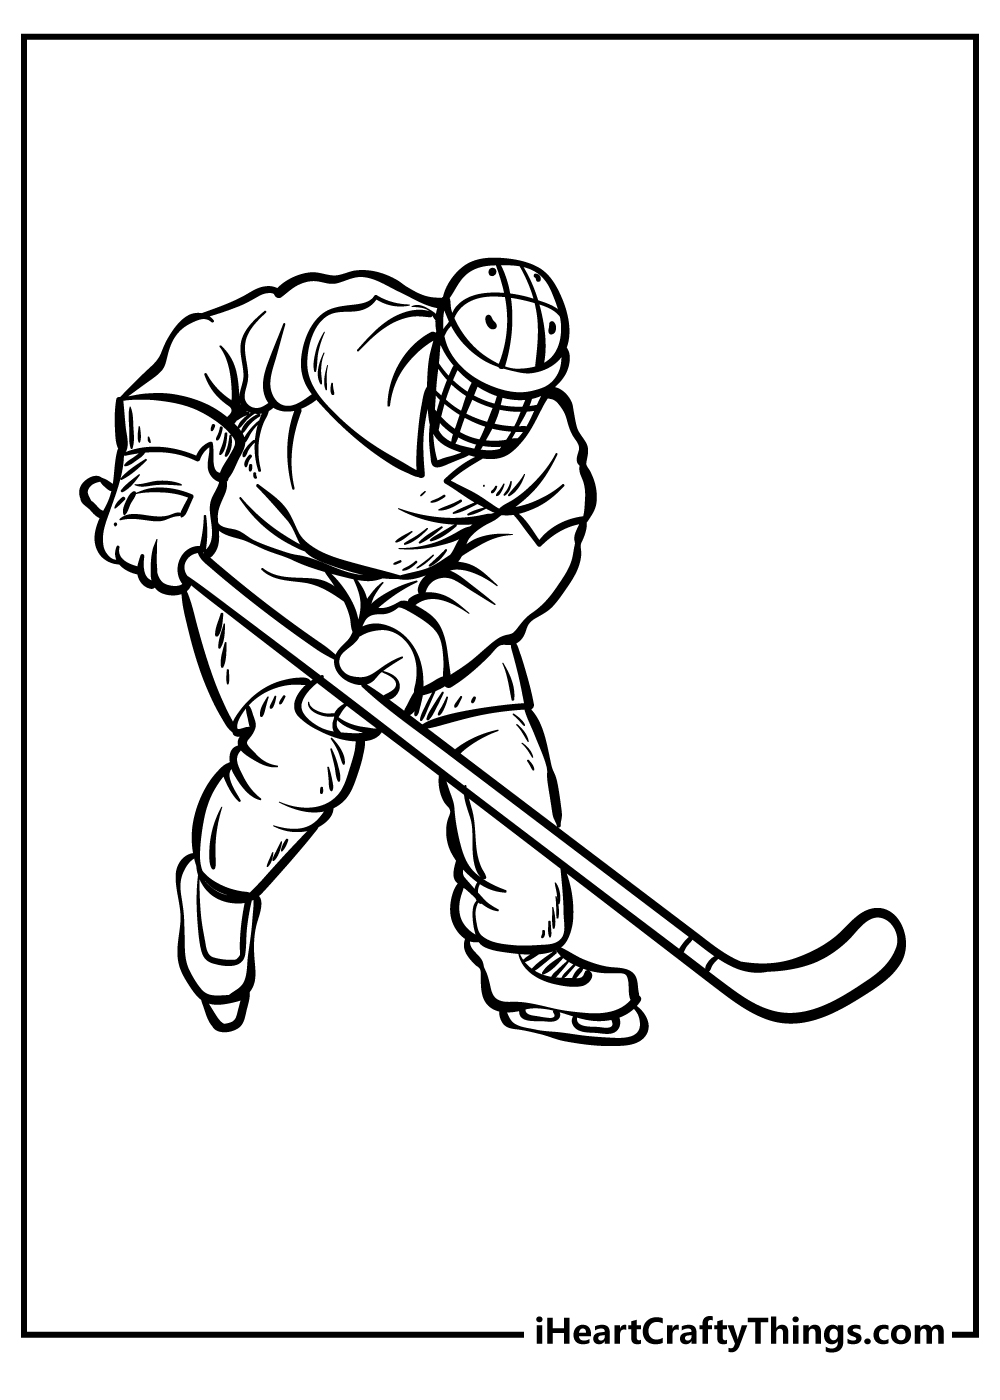 Hockey Coloring Original Sheet for children free download